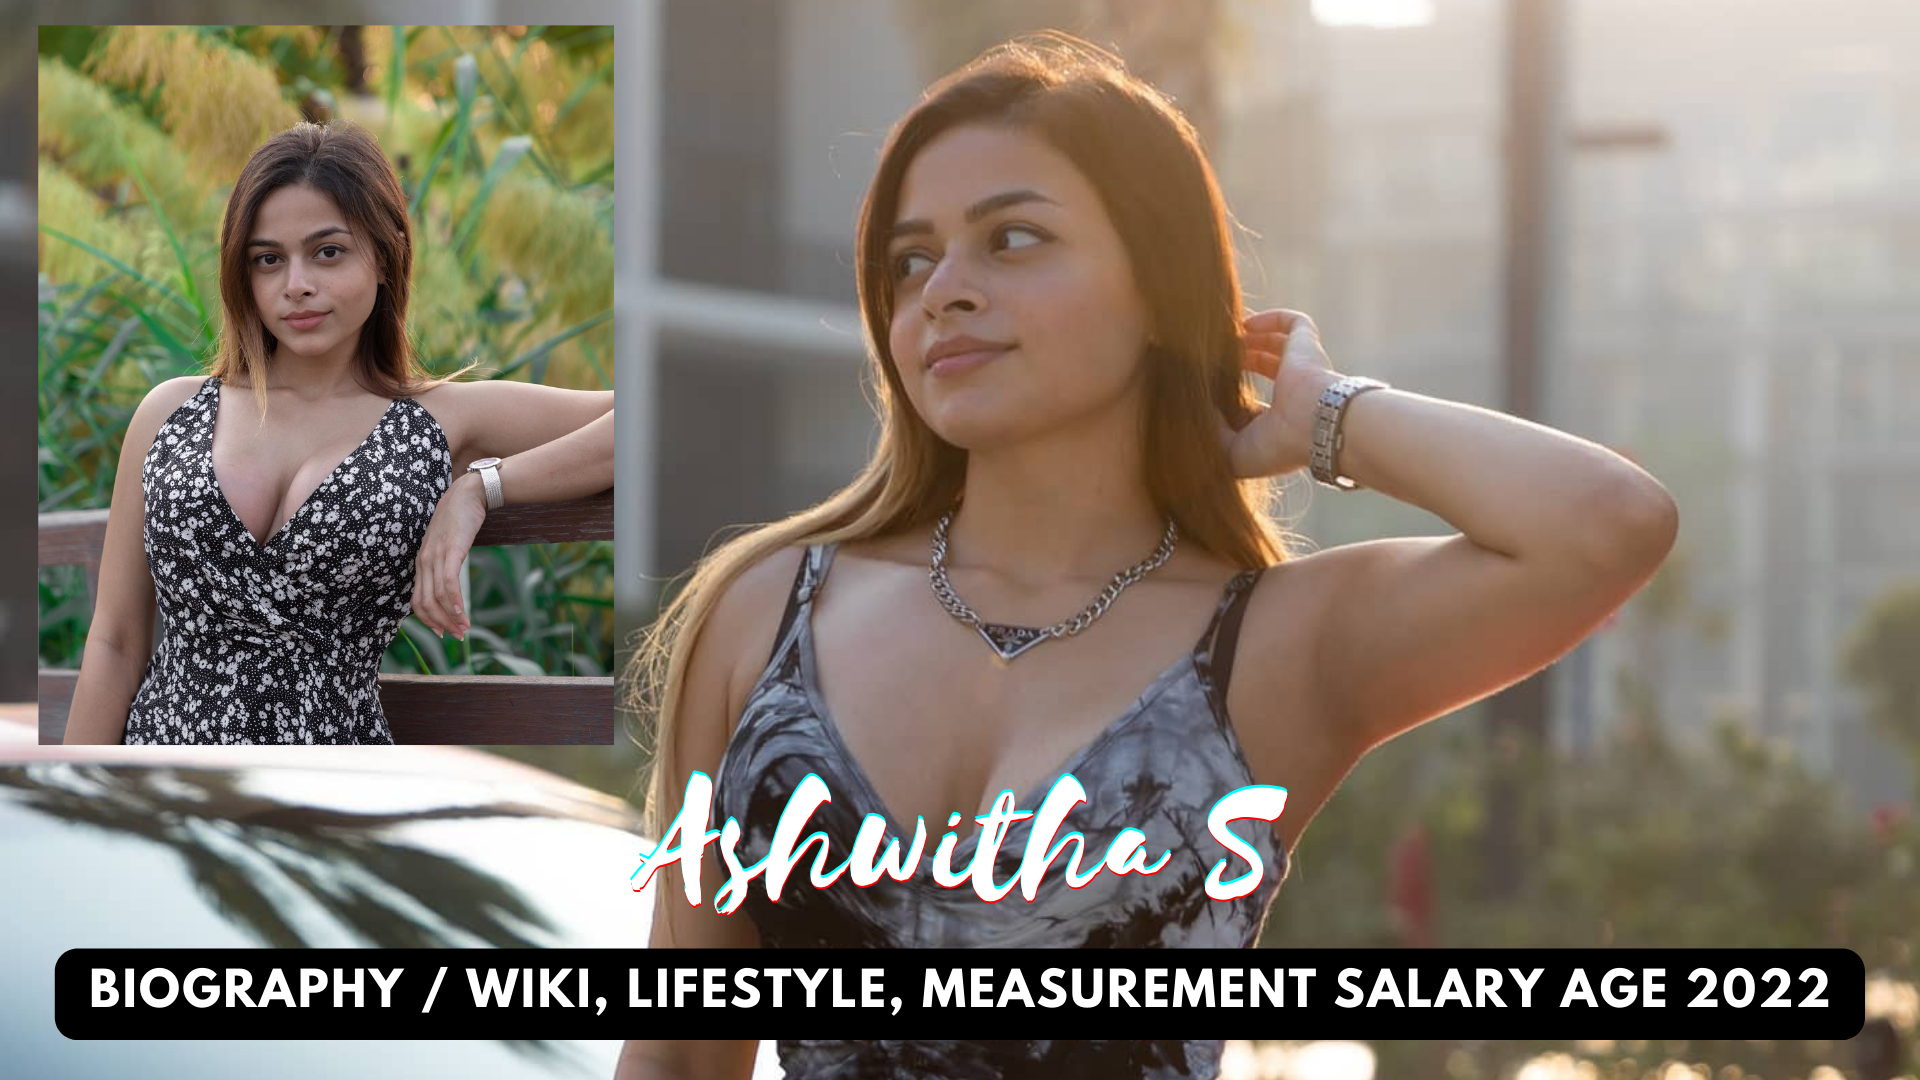 Ashwitha Subramaniam Biography Wiki Lifestyle, Measurement Salary Age 2022